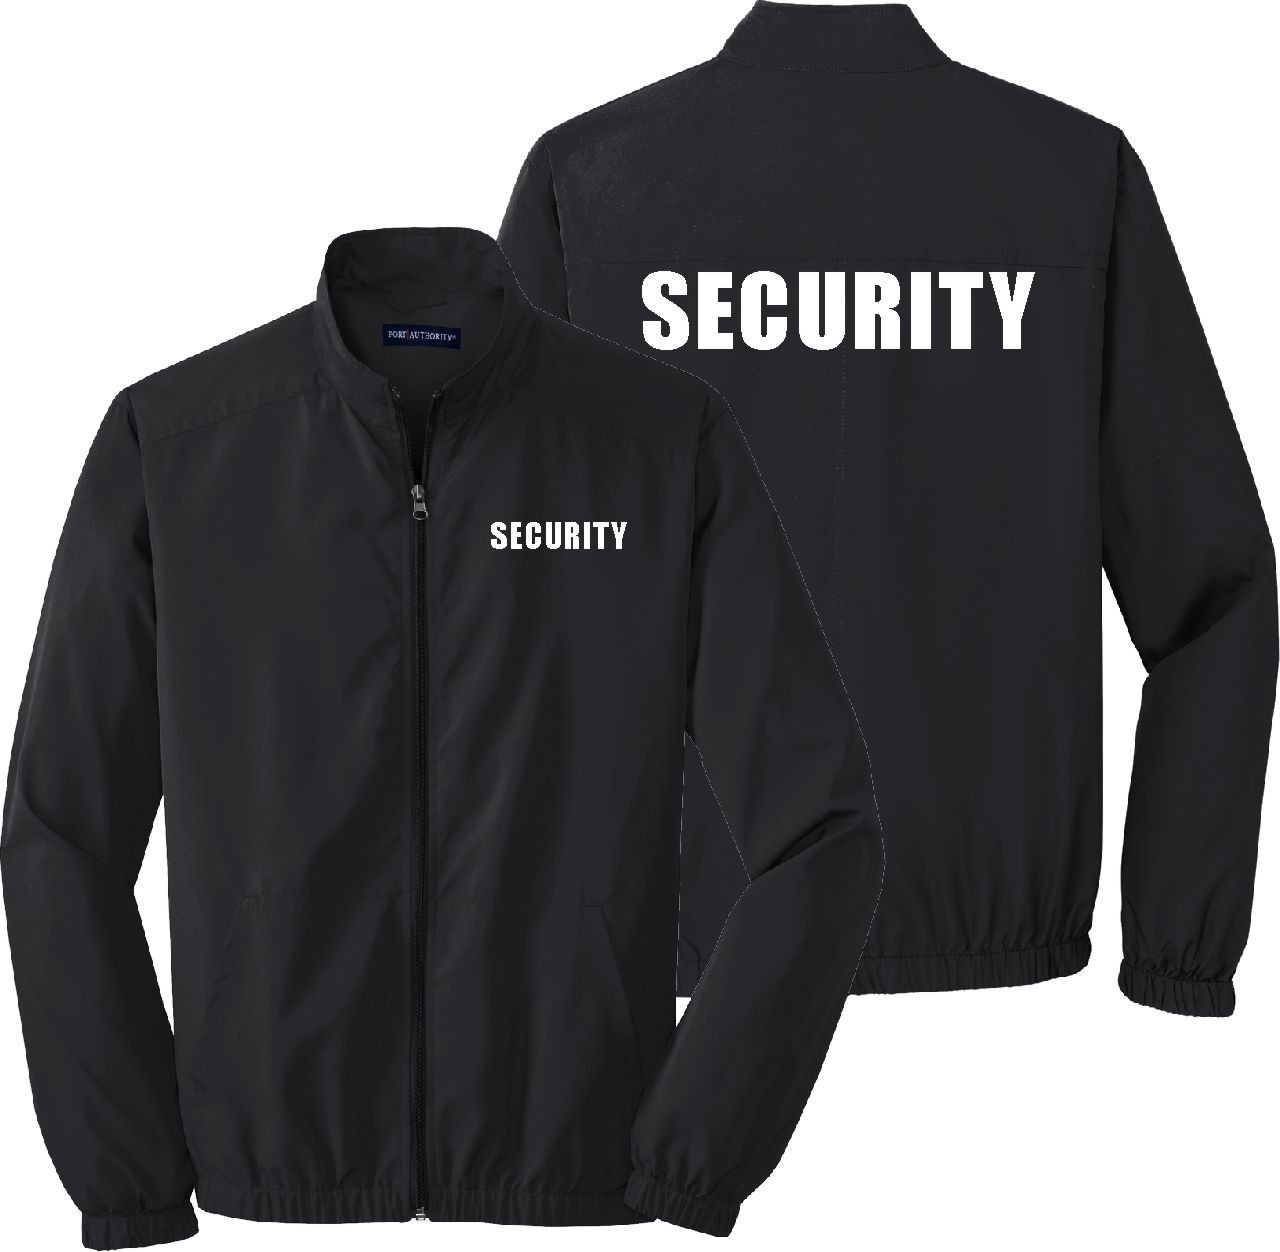 Security - Lightweight Windbreaker Jacket